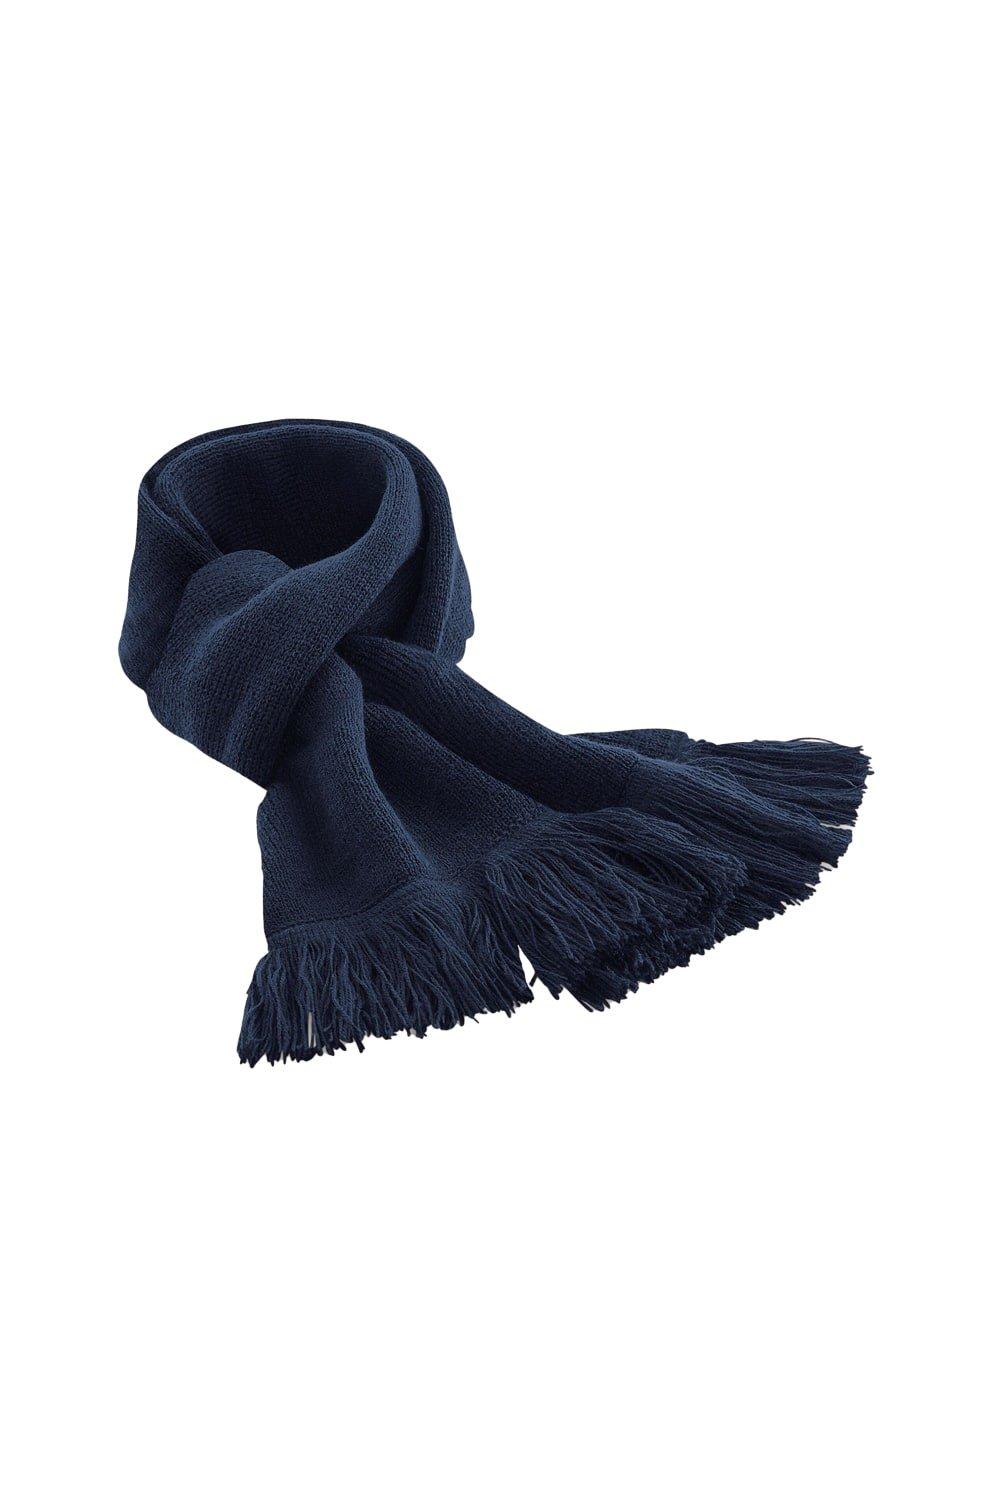 Классический вязаный зимний шарф Beechfield, темно-синий